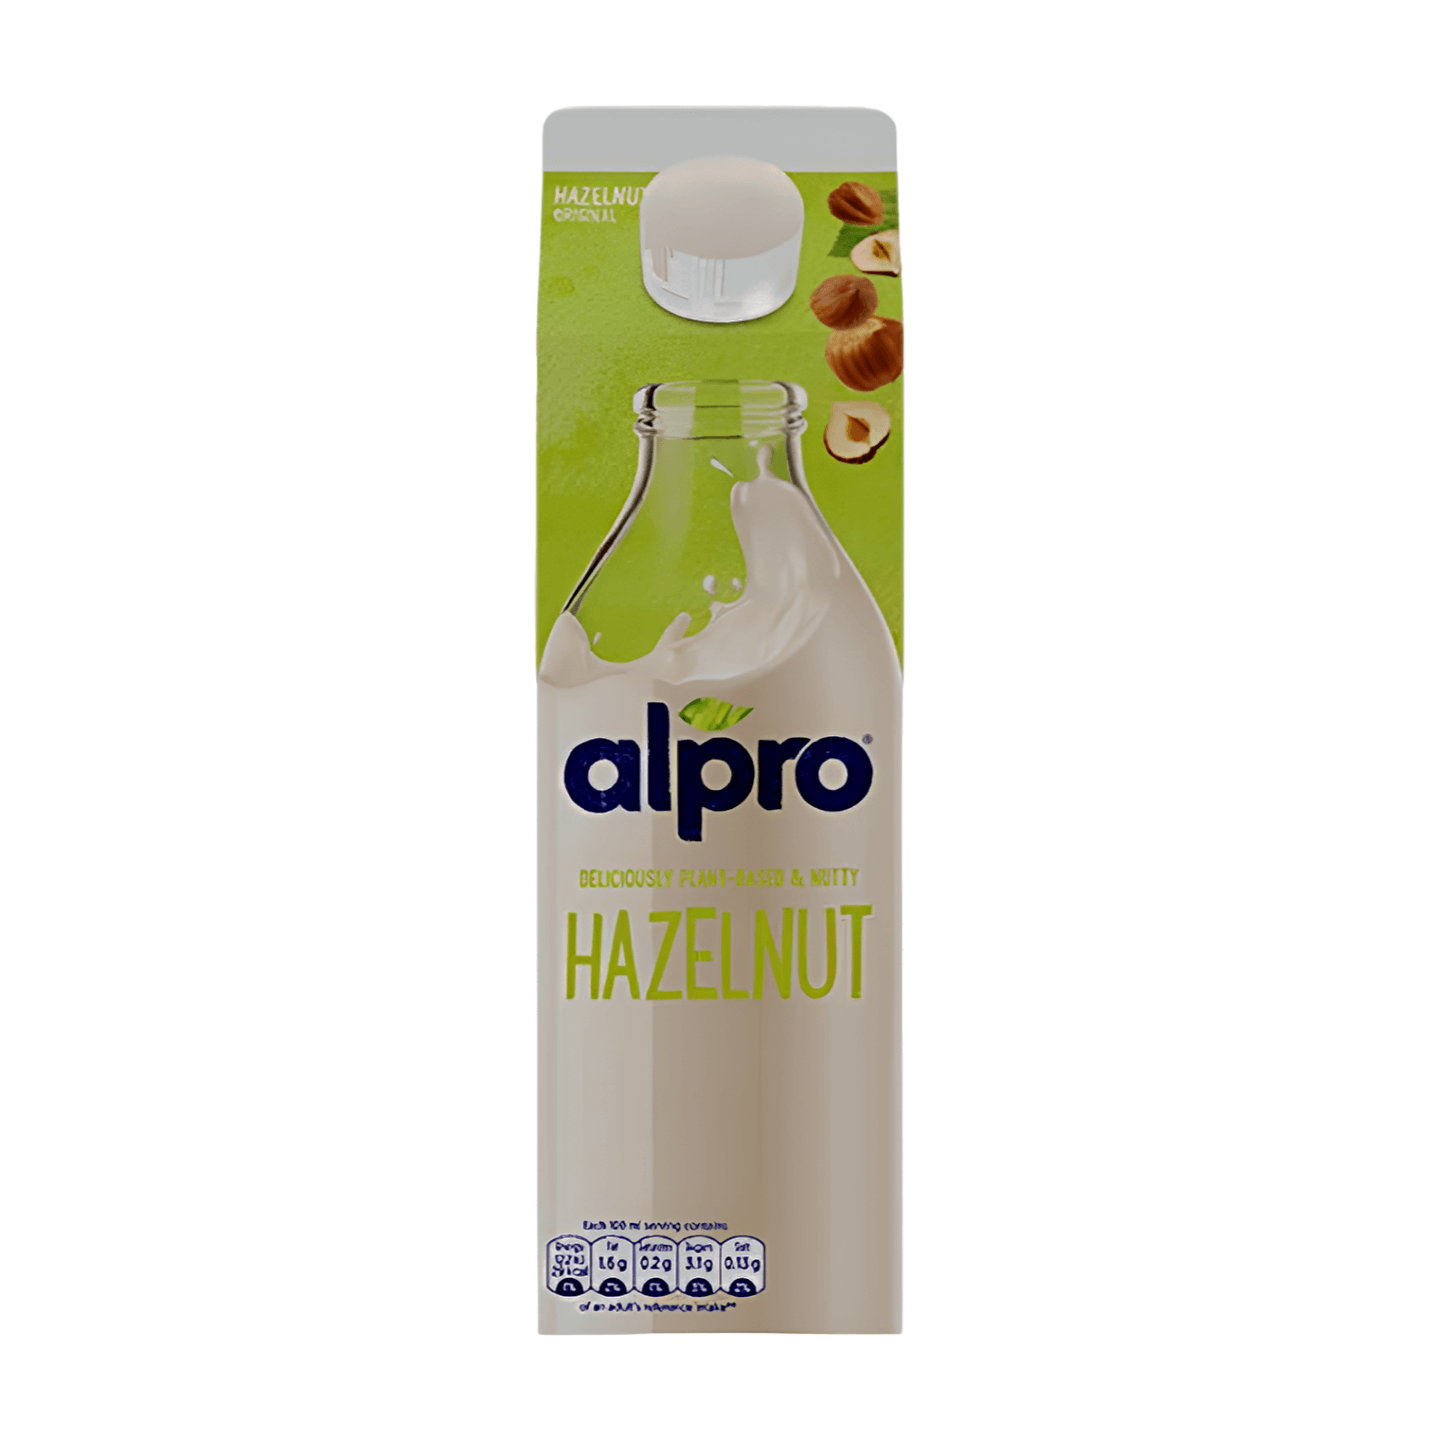 Alpro Hazelnut Original Chilled